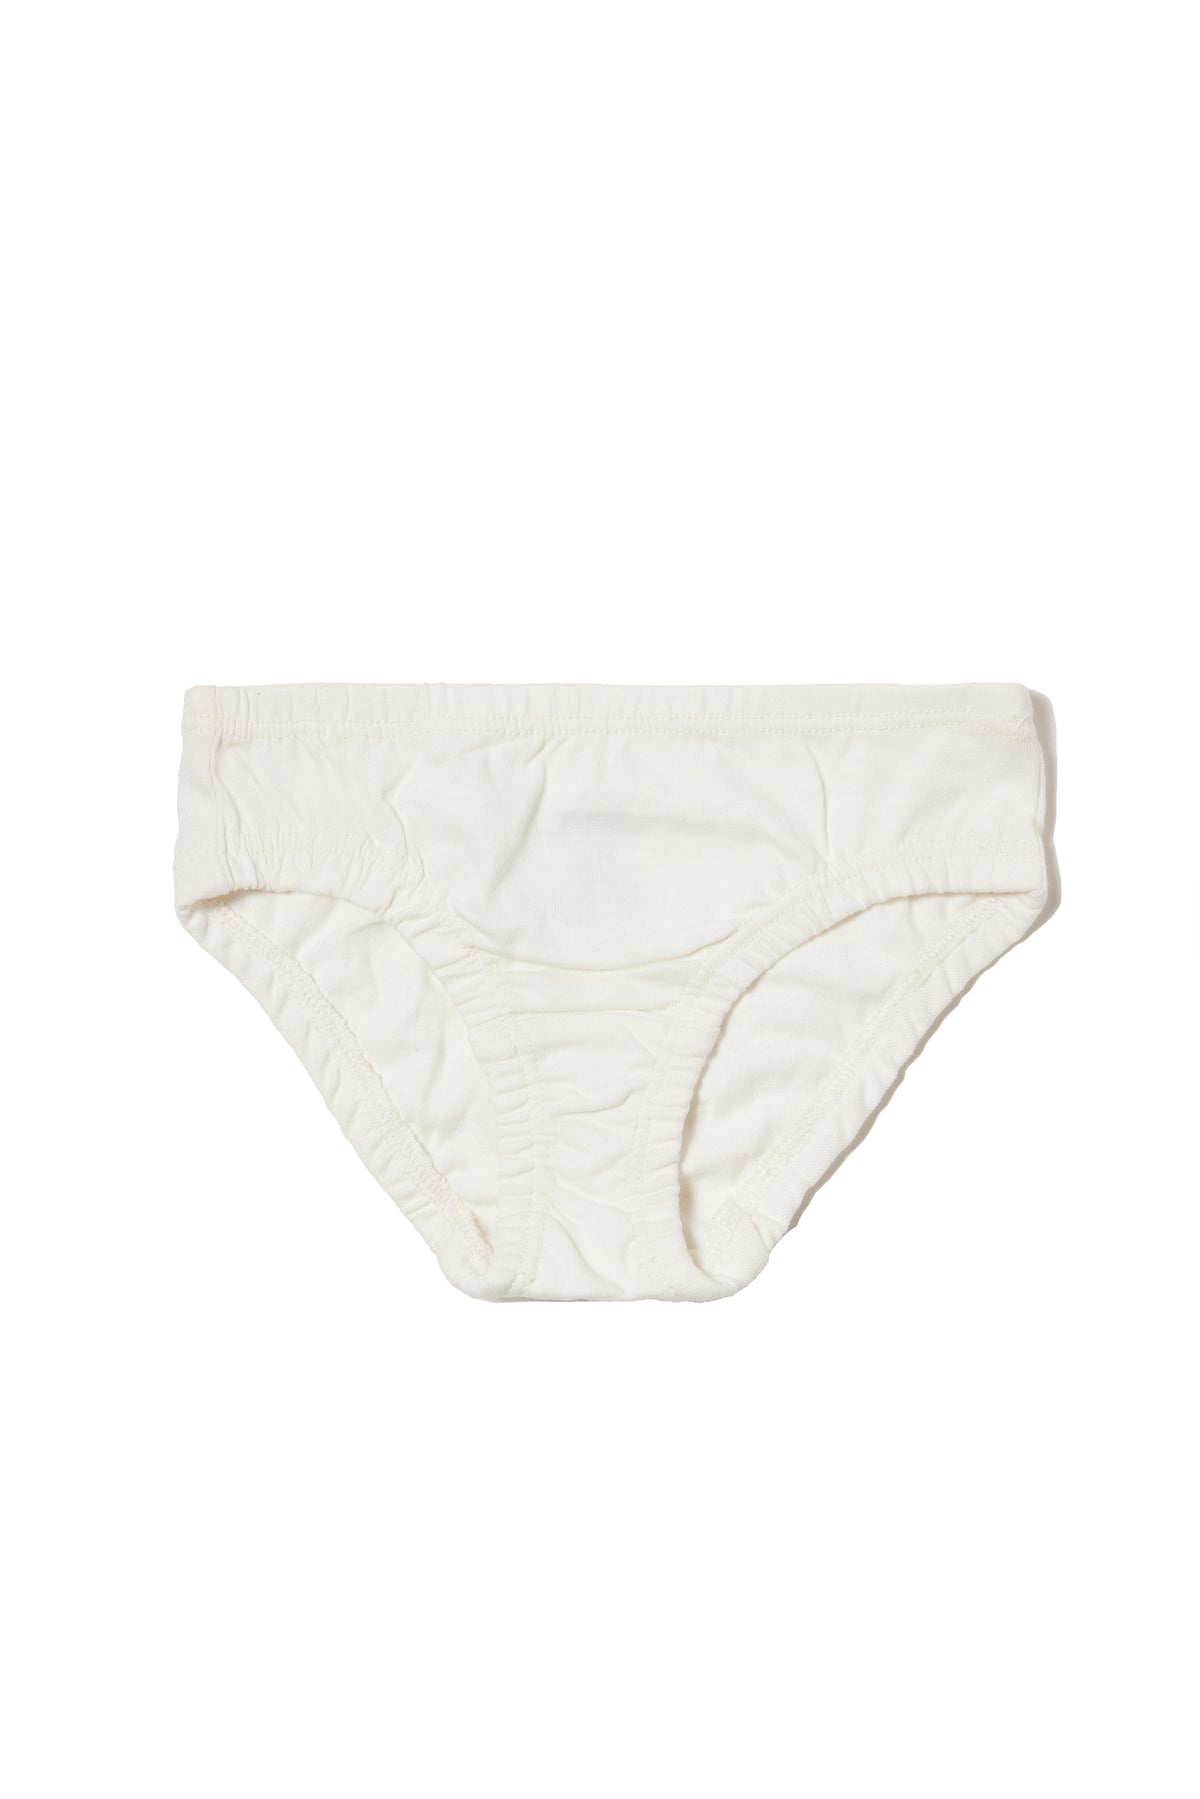 Comfortable Organic Cotton Kids Panties for Girl Underwear Lovely